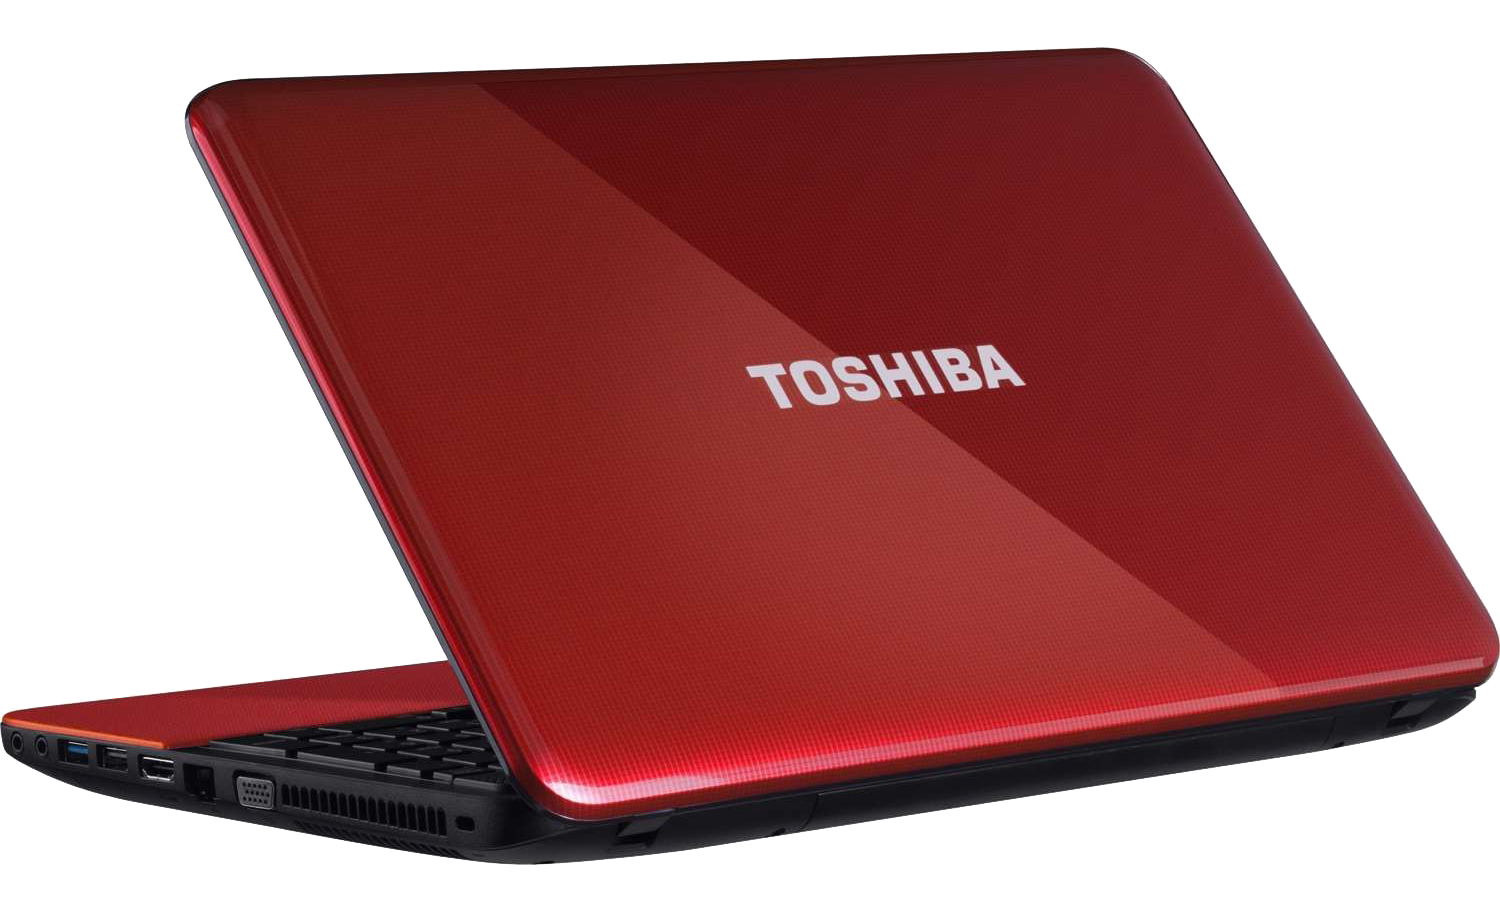 Toshiba Laptop Image PNG Image